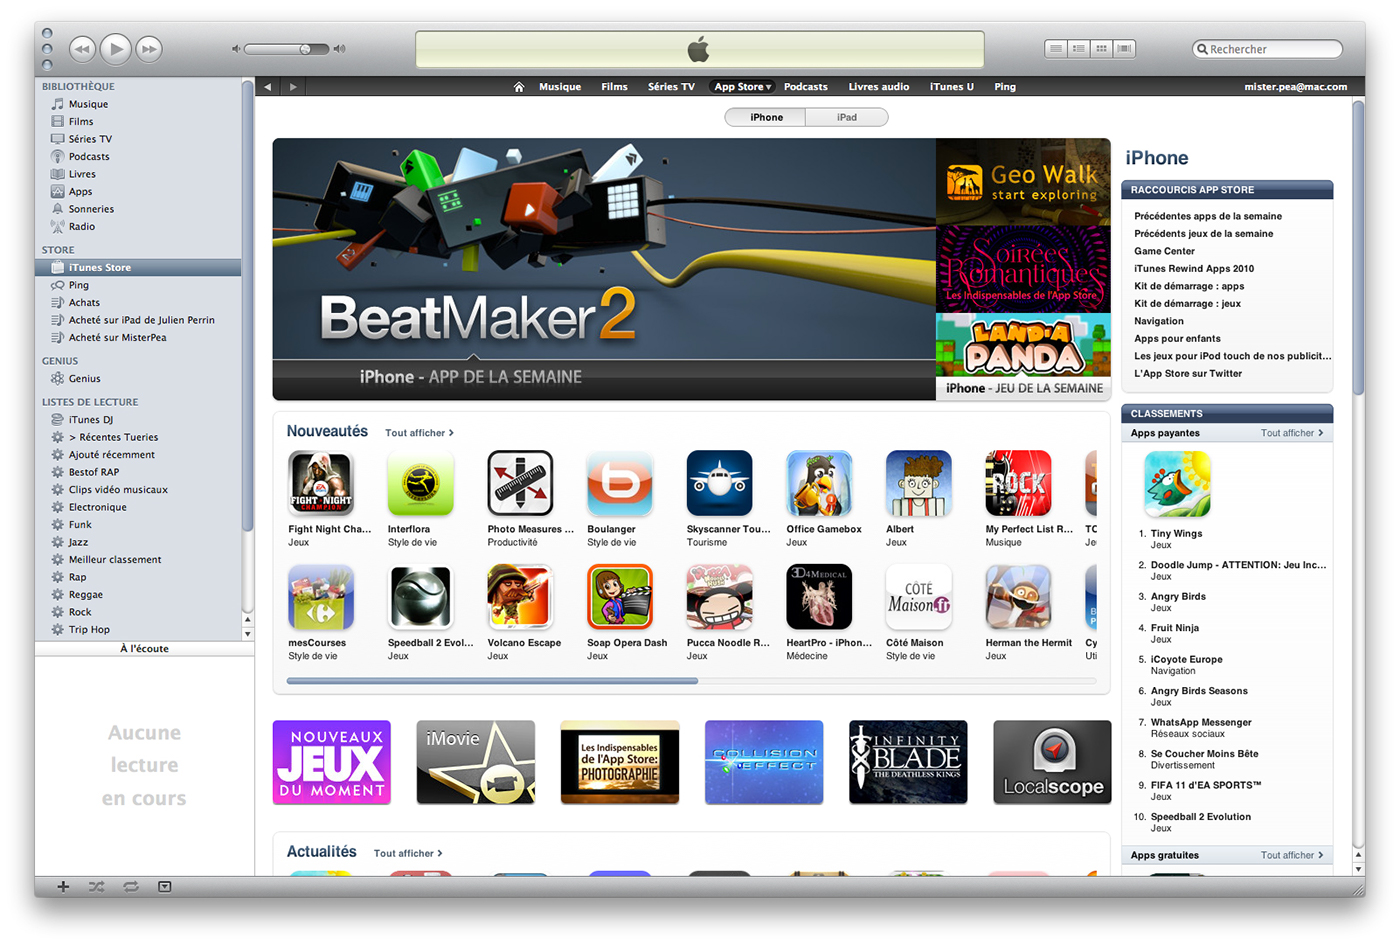 intua BeatMaker Version 2 Beatmaker 2 user interface hardware based tools sequencer mixer studio application iphone effects iPad touch screen ios 3D apple